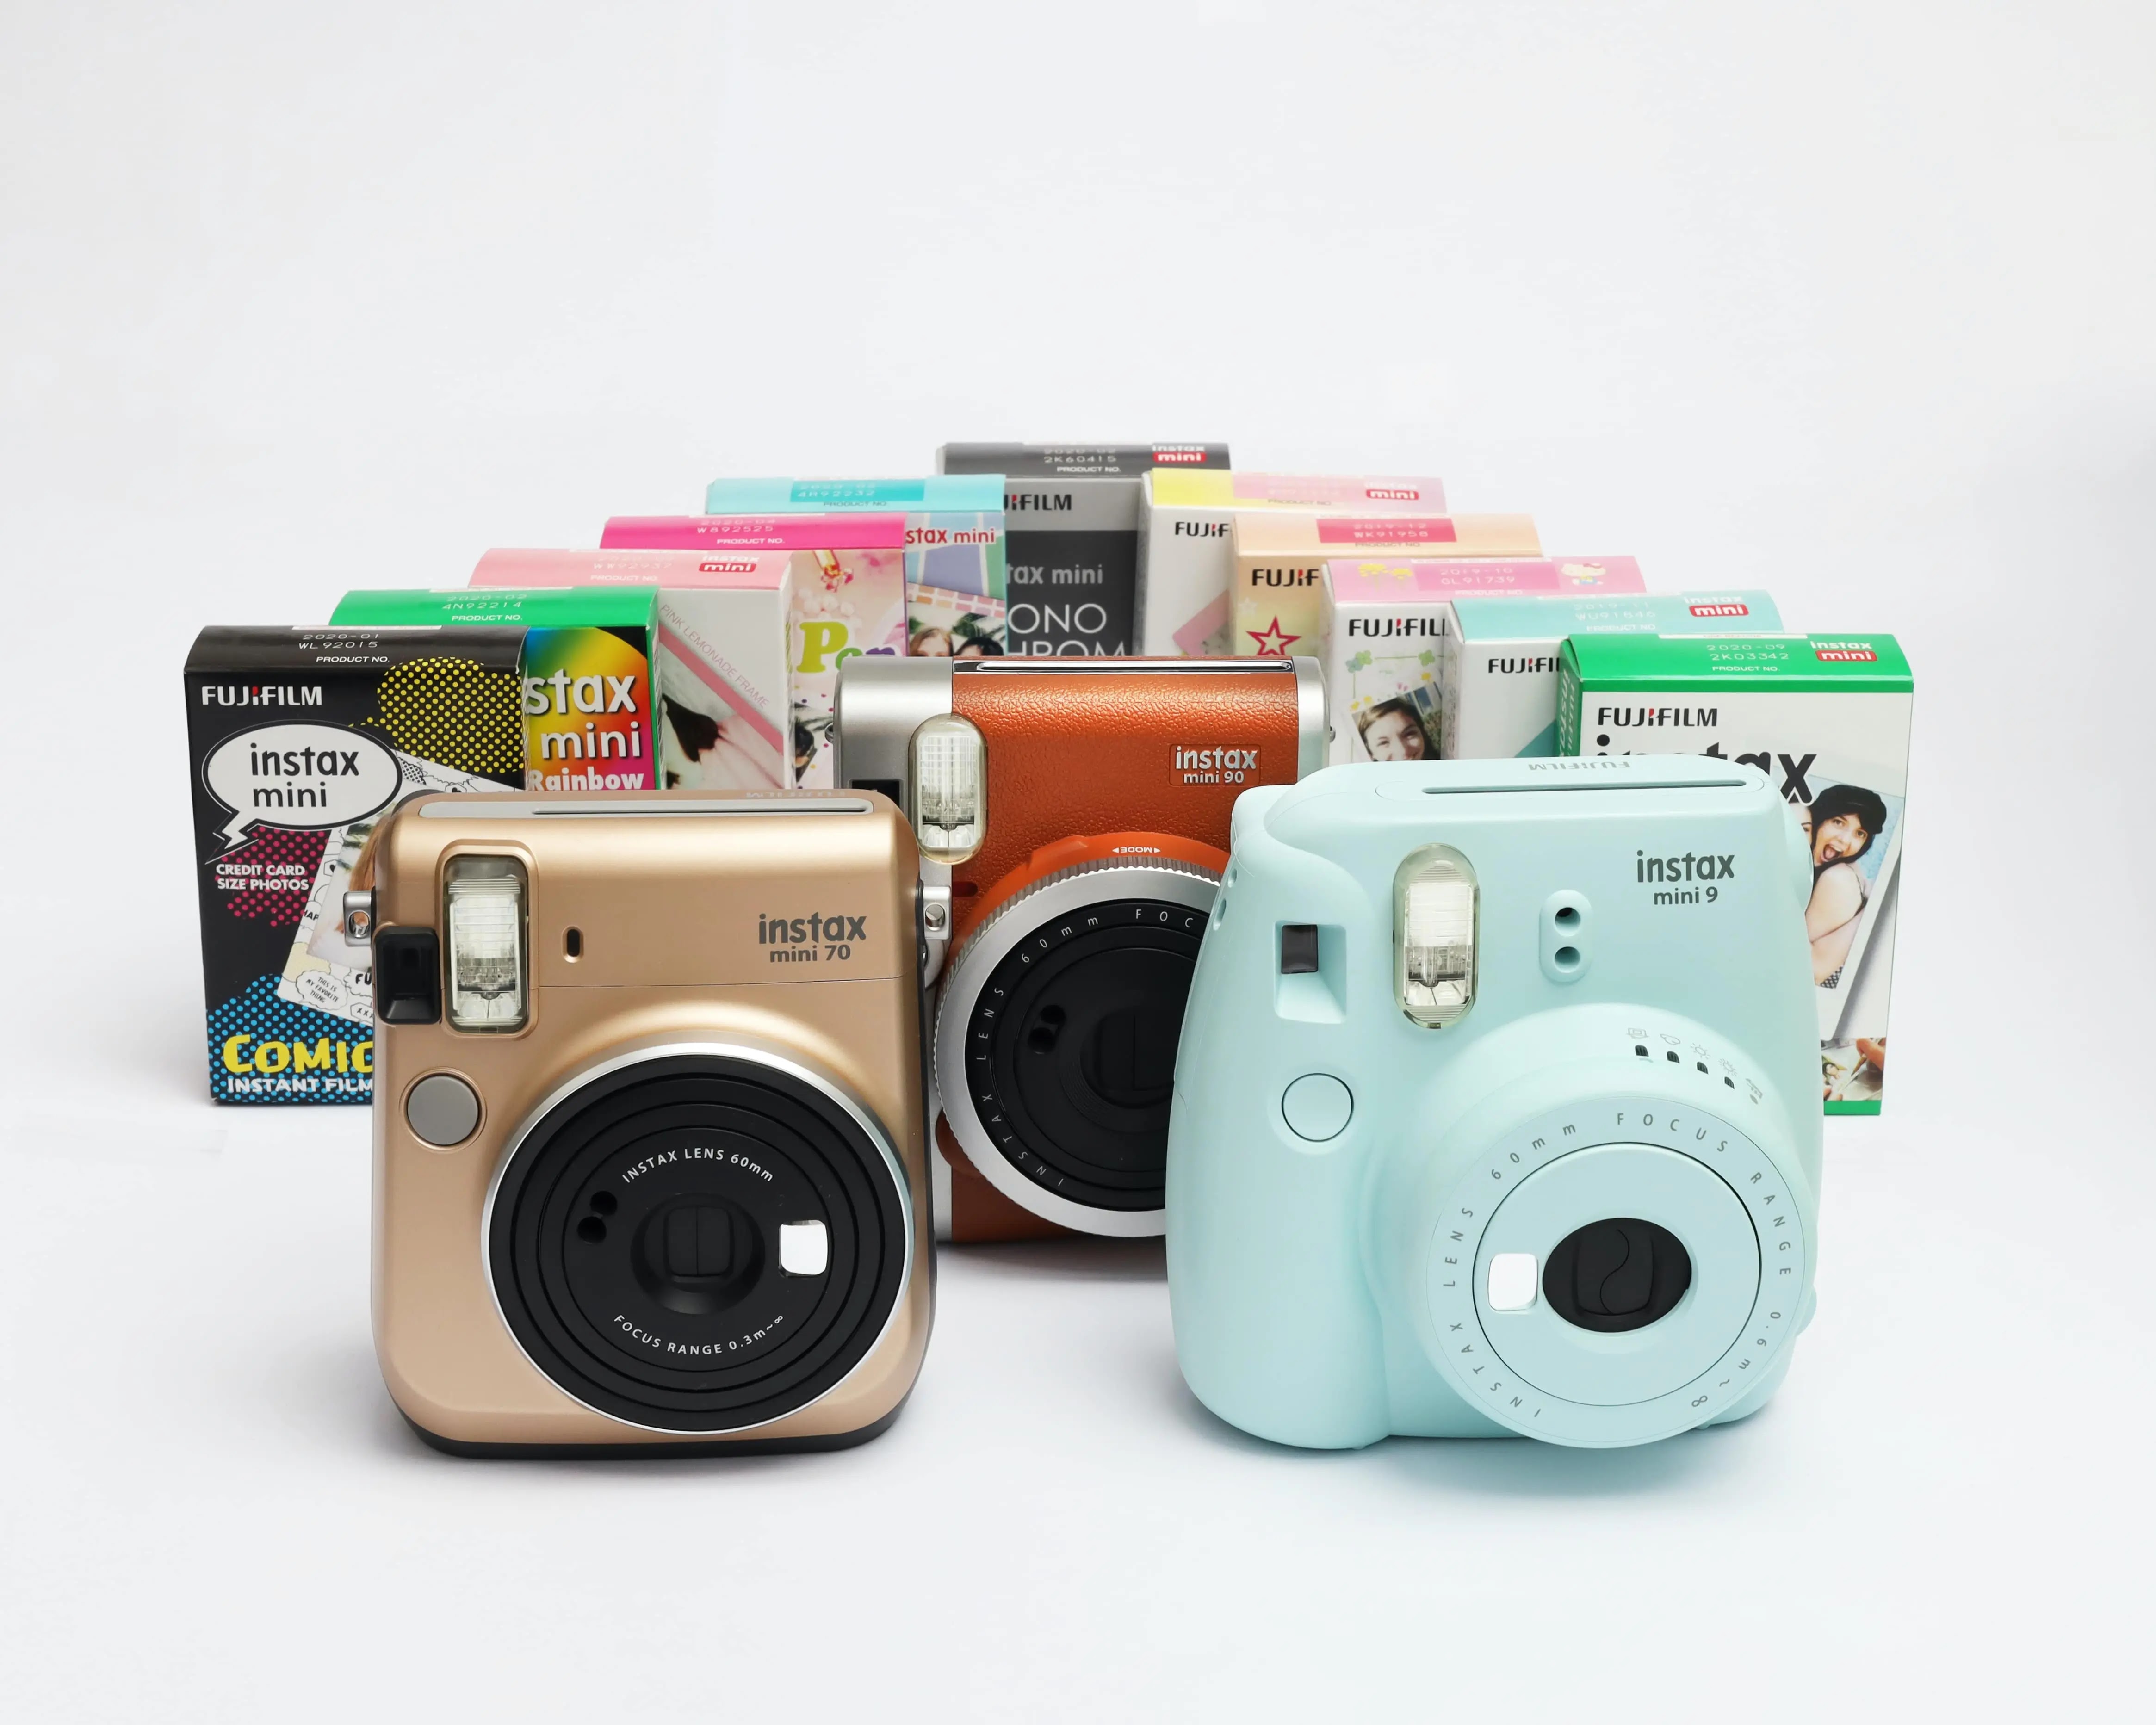 Fuji Film Instax Camera,fujifilm instax camera review